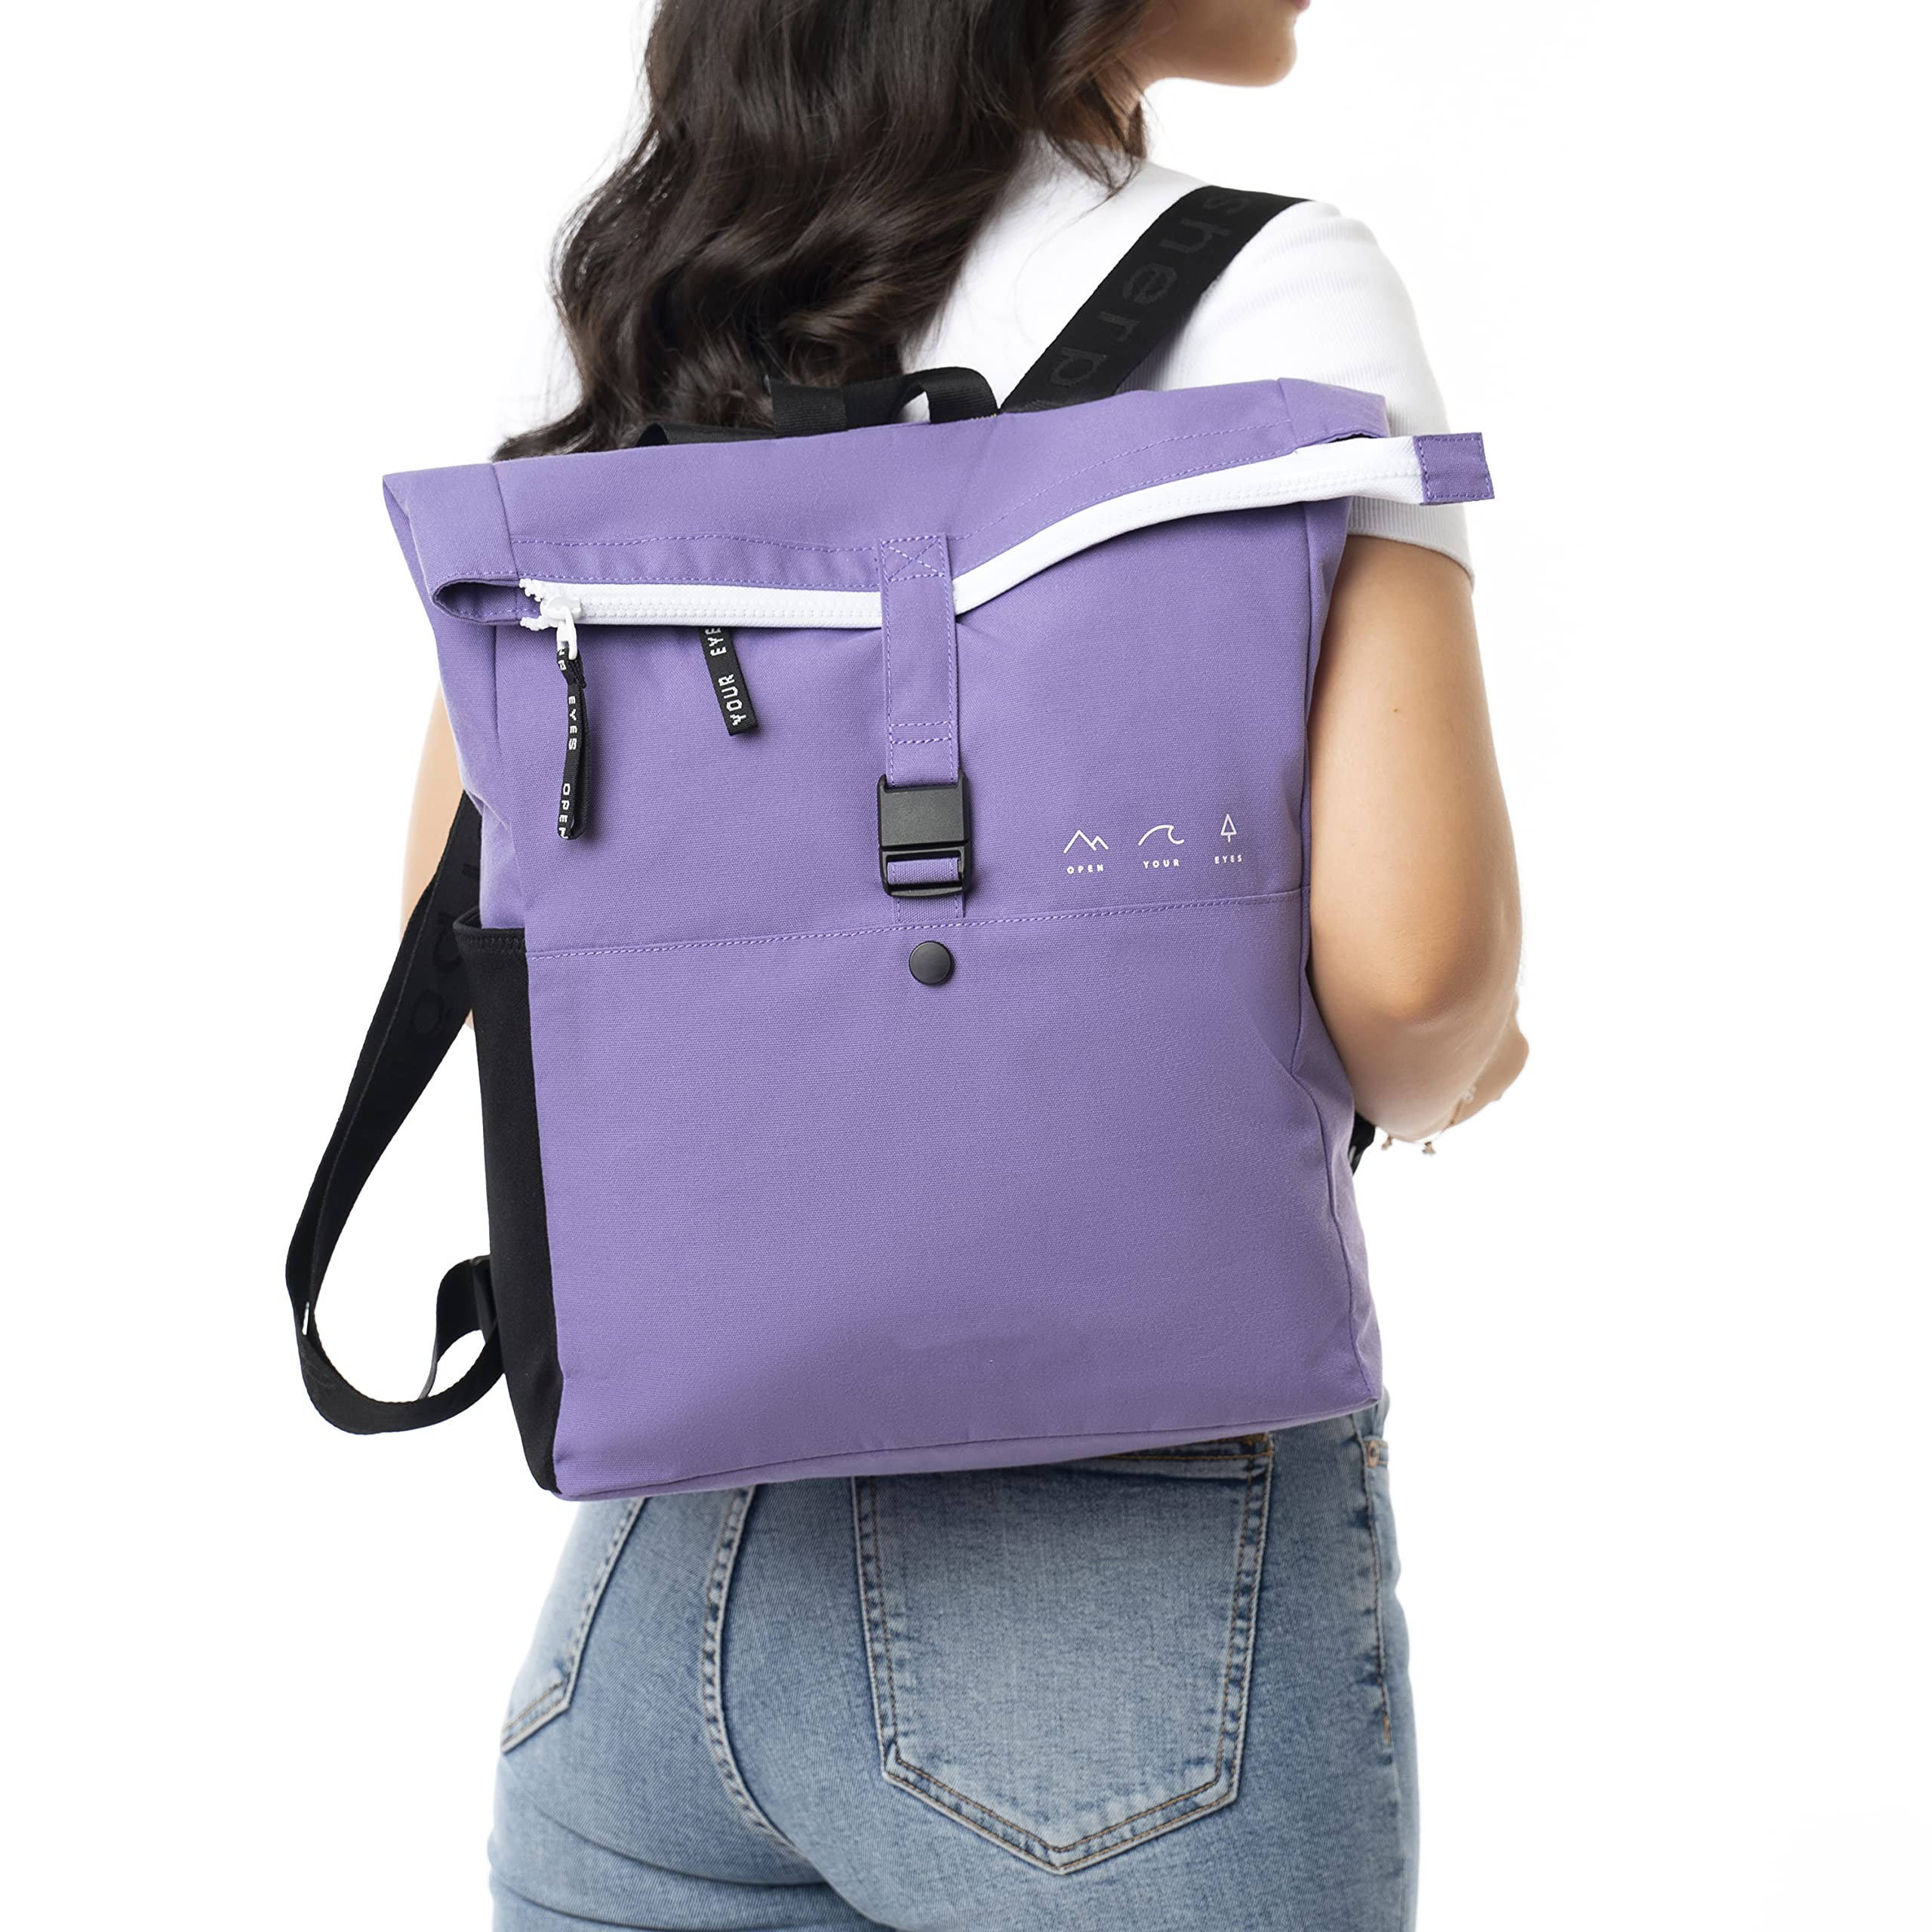 Waterproof Women Travel Backpack Anti Theft Rucksack Casual Daypacks Lightweight Backpack